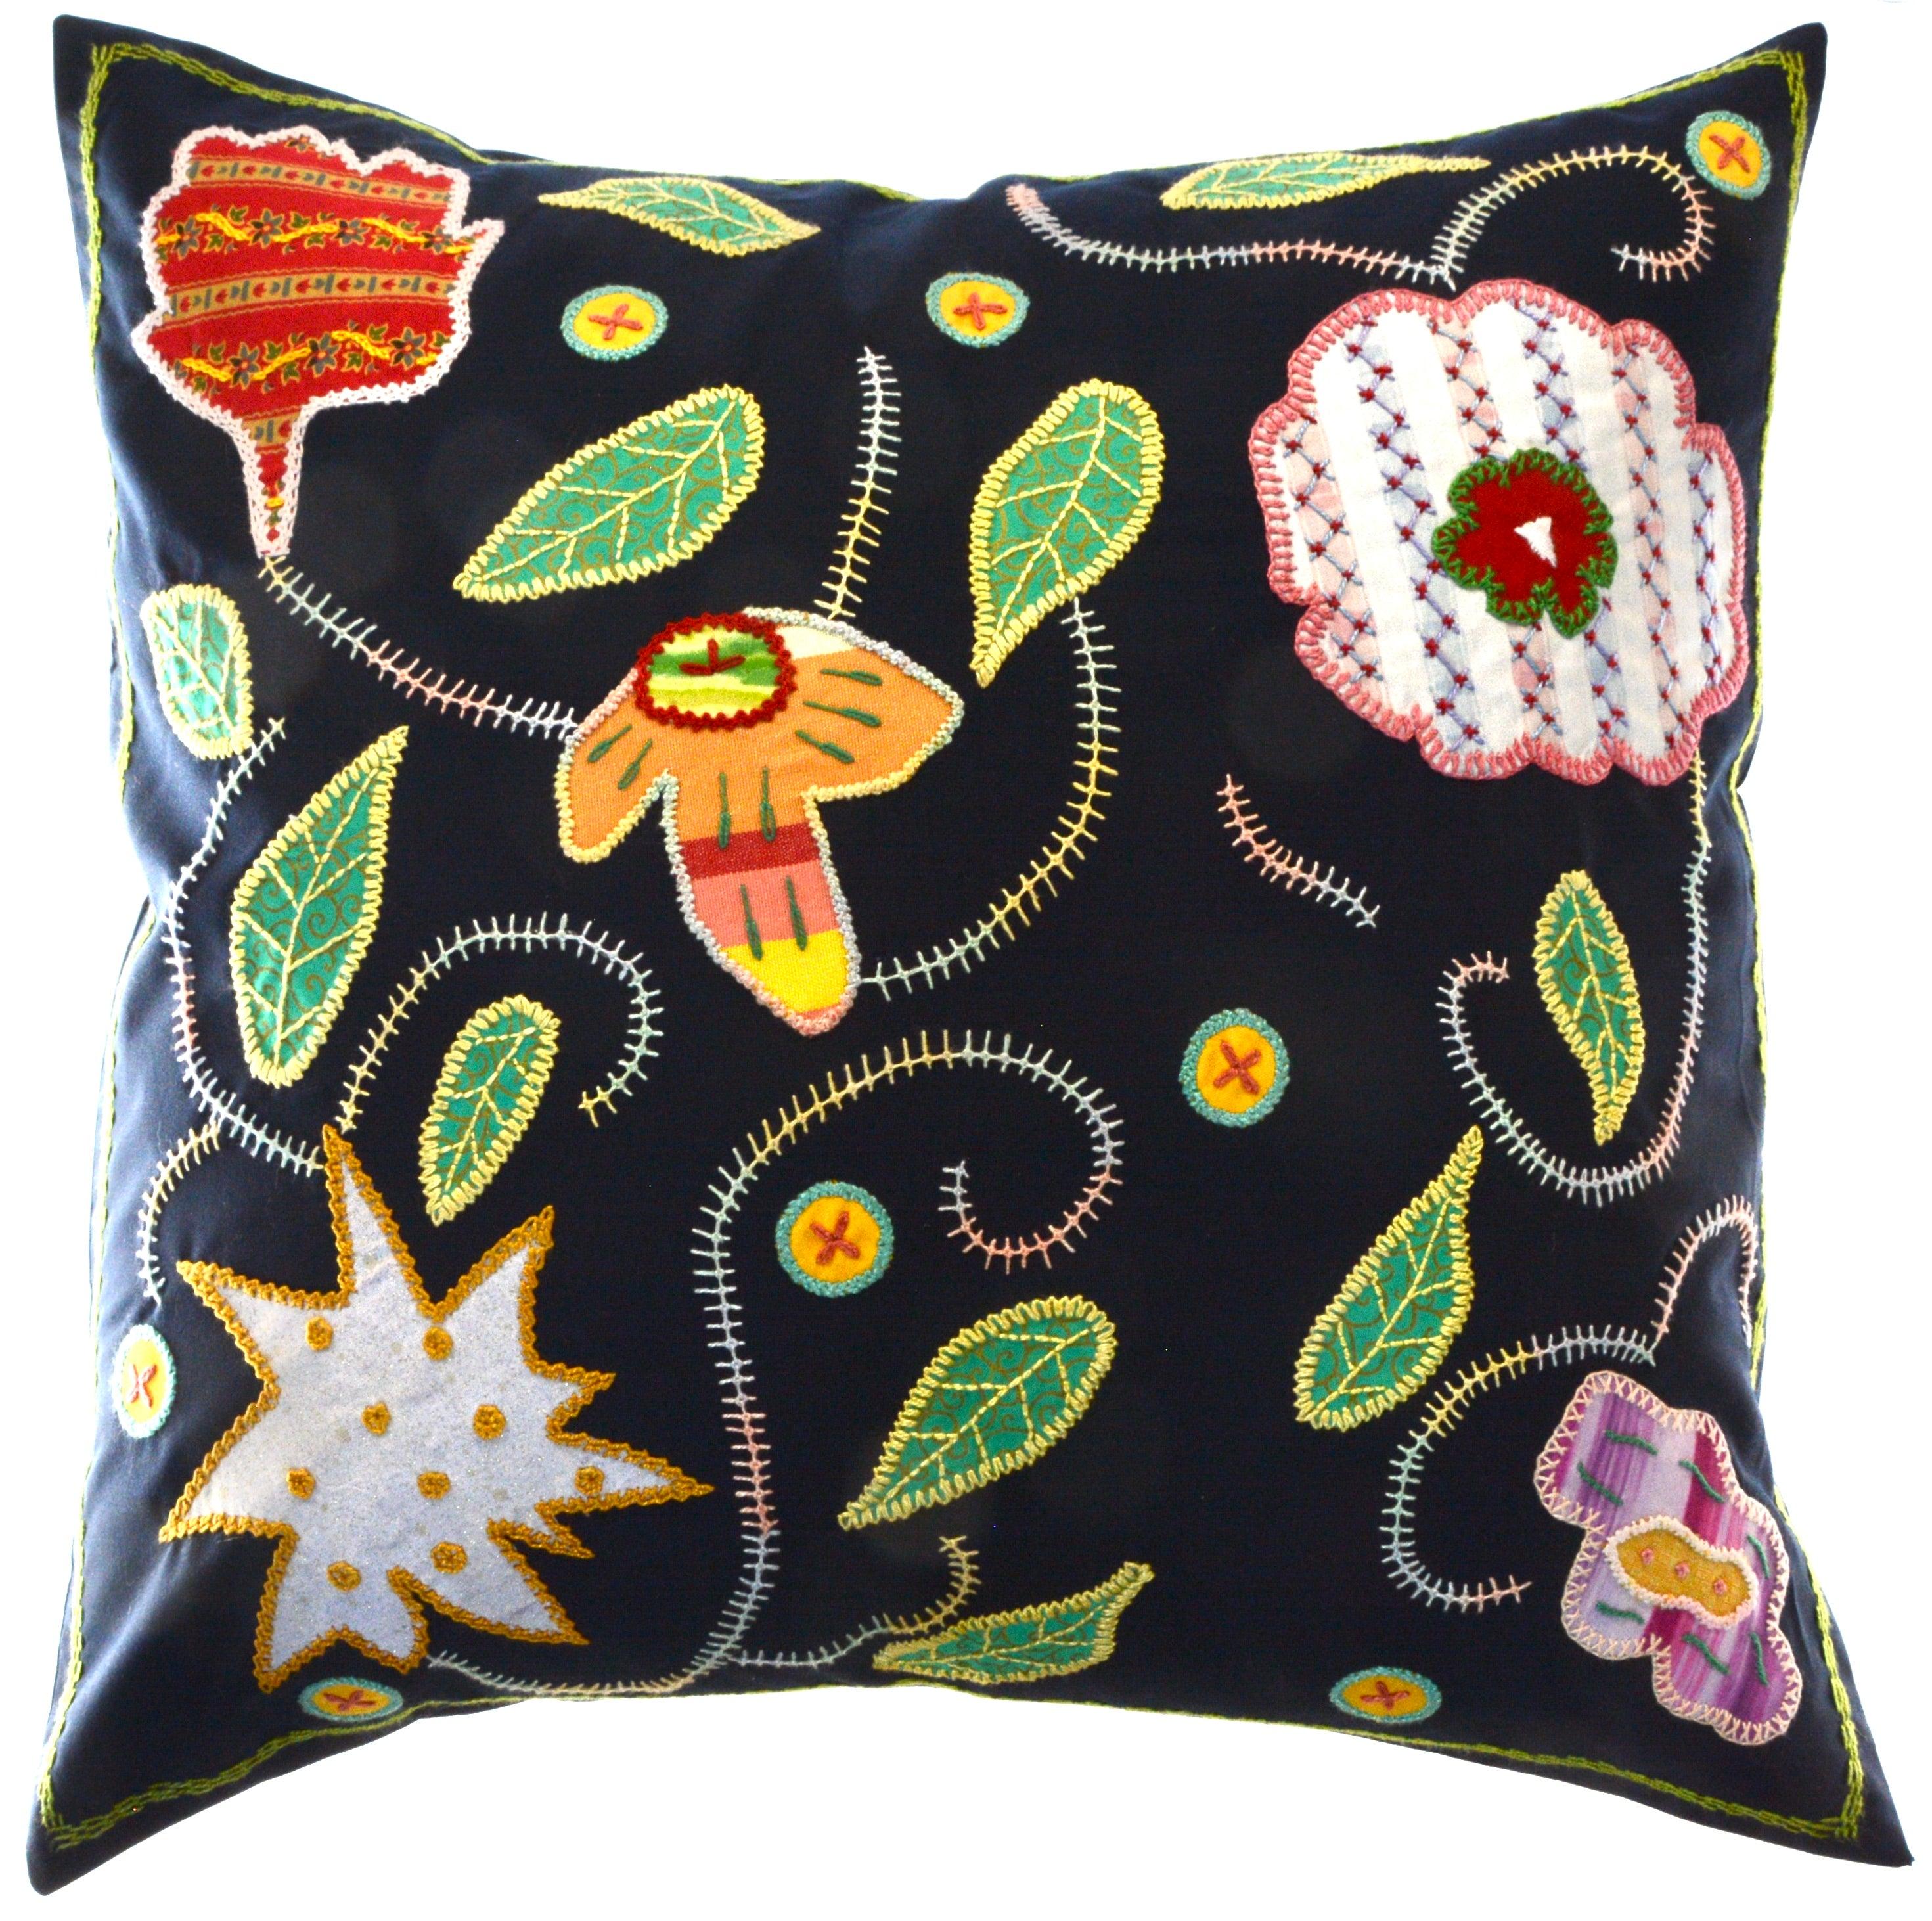 Rosas Design Embroidered Pillow on Black Honduras Threads